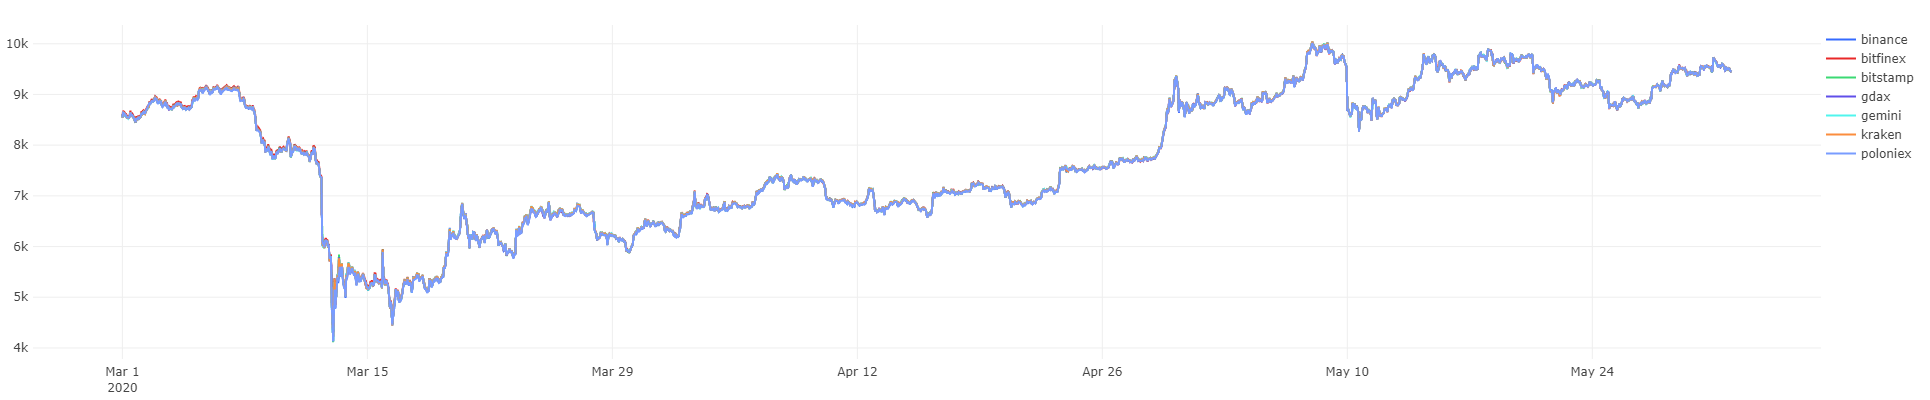 Bitcoin Price On Major Exchanges (GDAX denotes Coinbase). Source: Nomics